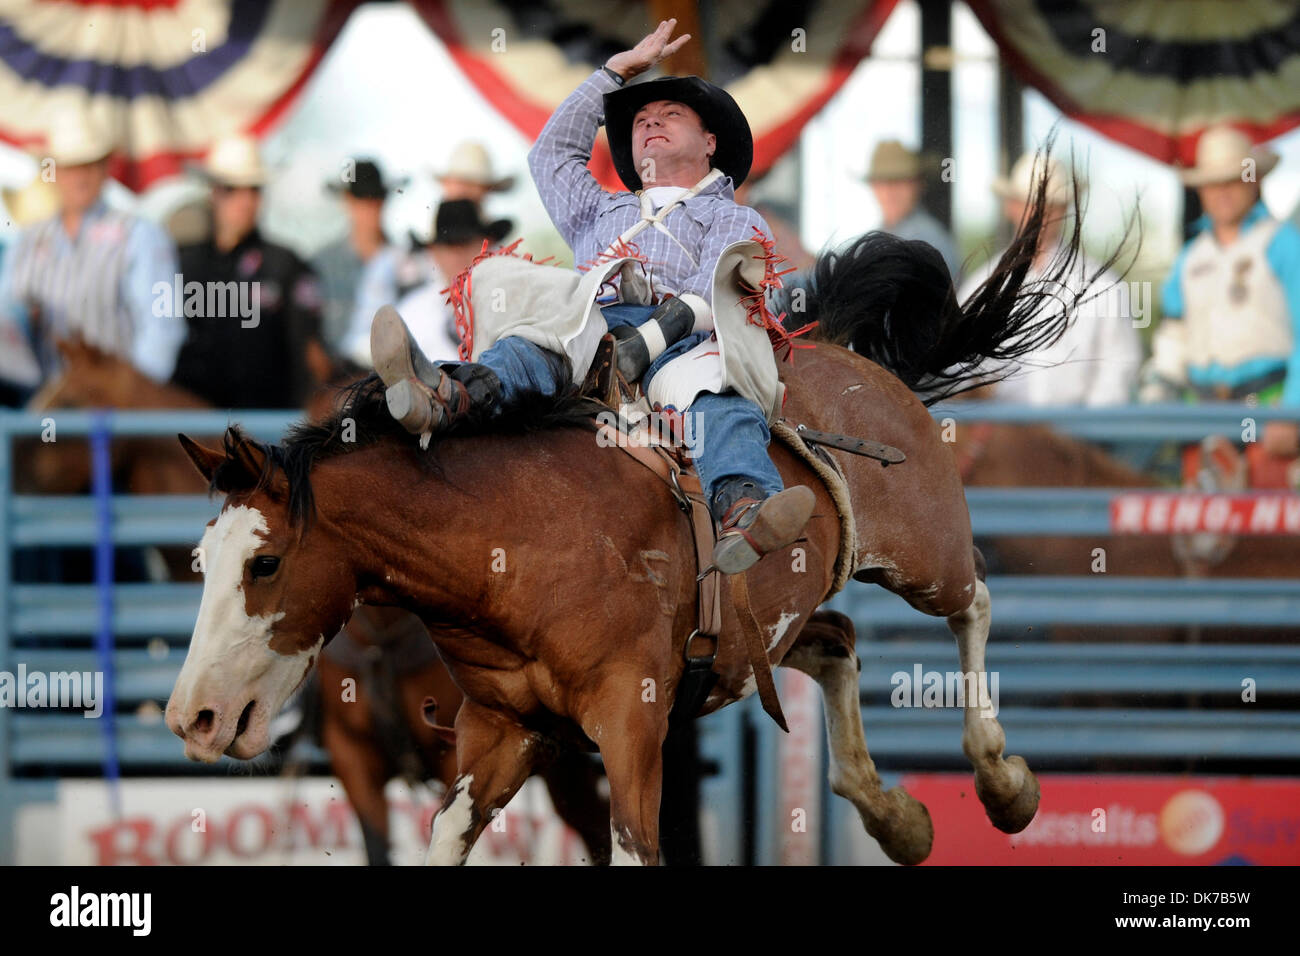 June 18, 2011 - Reno, Nevada, U.S - Eric Swenson of Denison, TX rides What's Up at the Reno Rodeo. (Credit Image: © Matt Cohen/Southcreek Global/ZUMAPRESS.com) Stock Photo